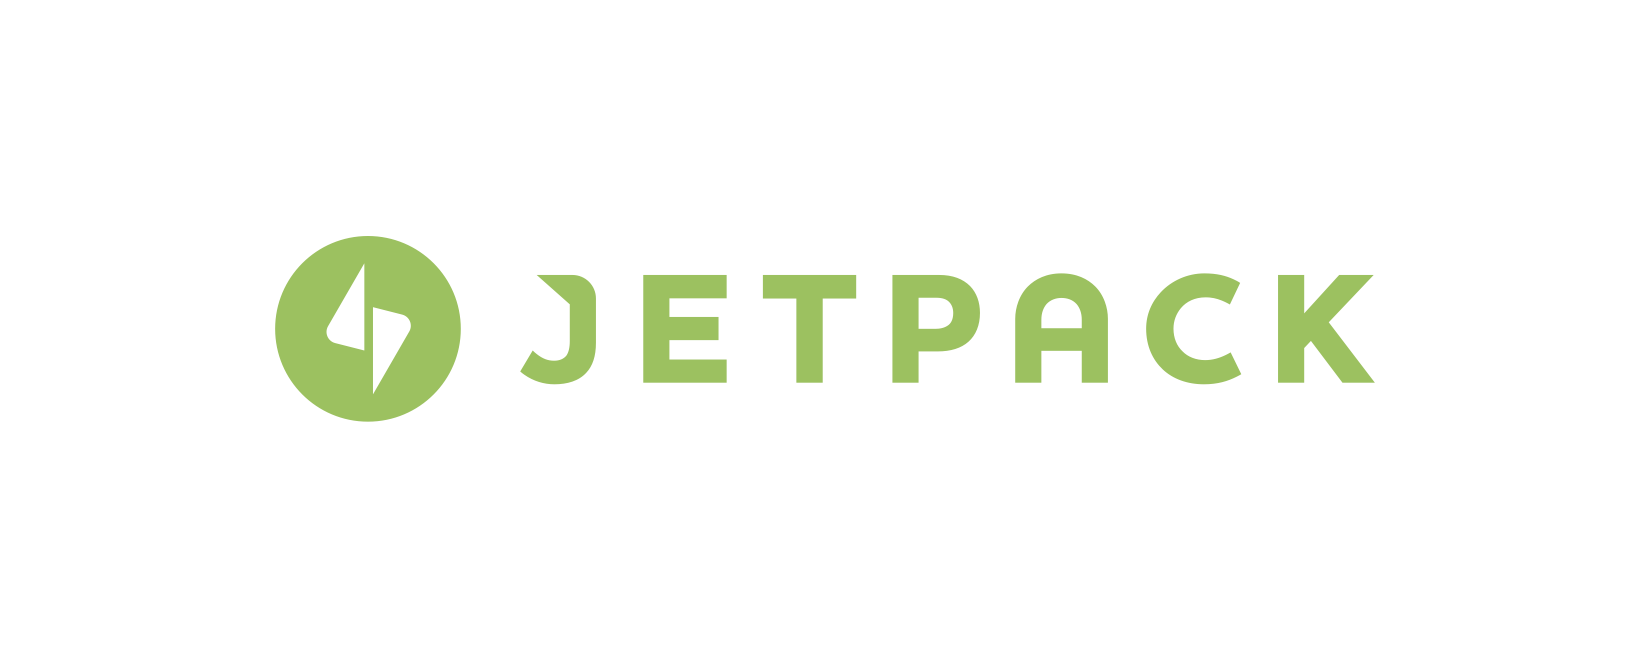 Jetpack / Automattic